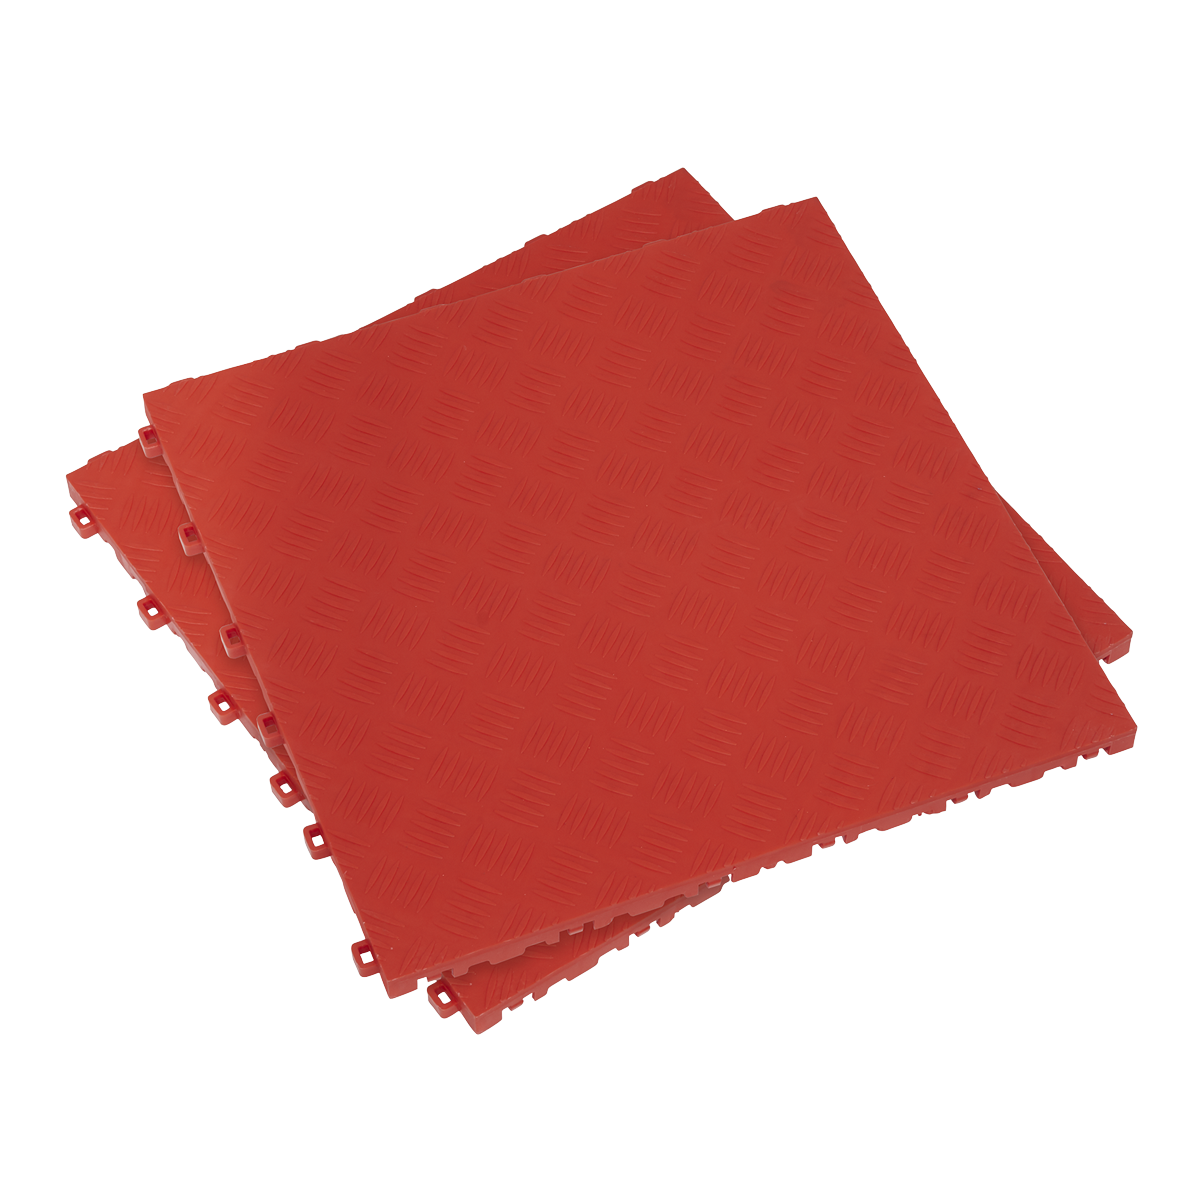 Polypropylene Floor Tile 400 x 400mm - Red Treadplate - Pack of 9 - FT3R - Farming Parts